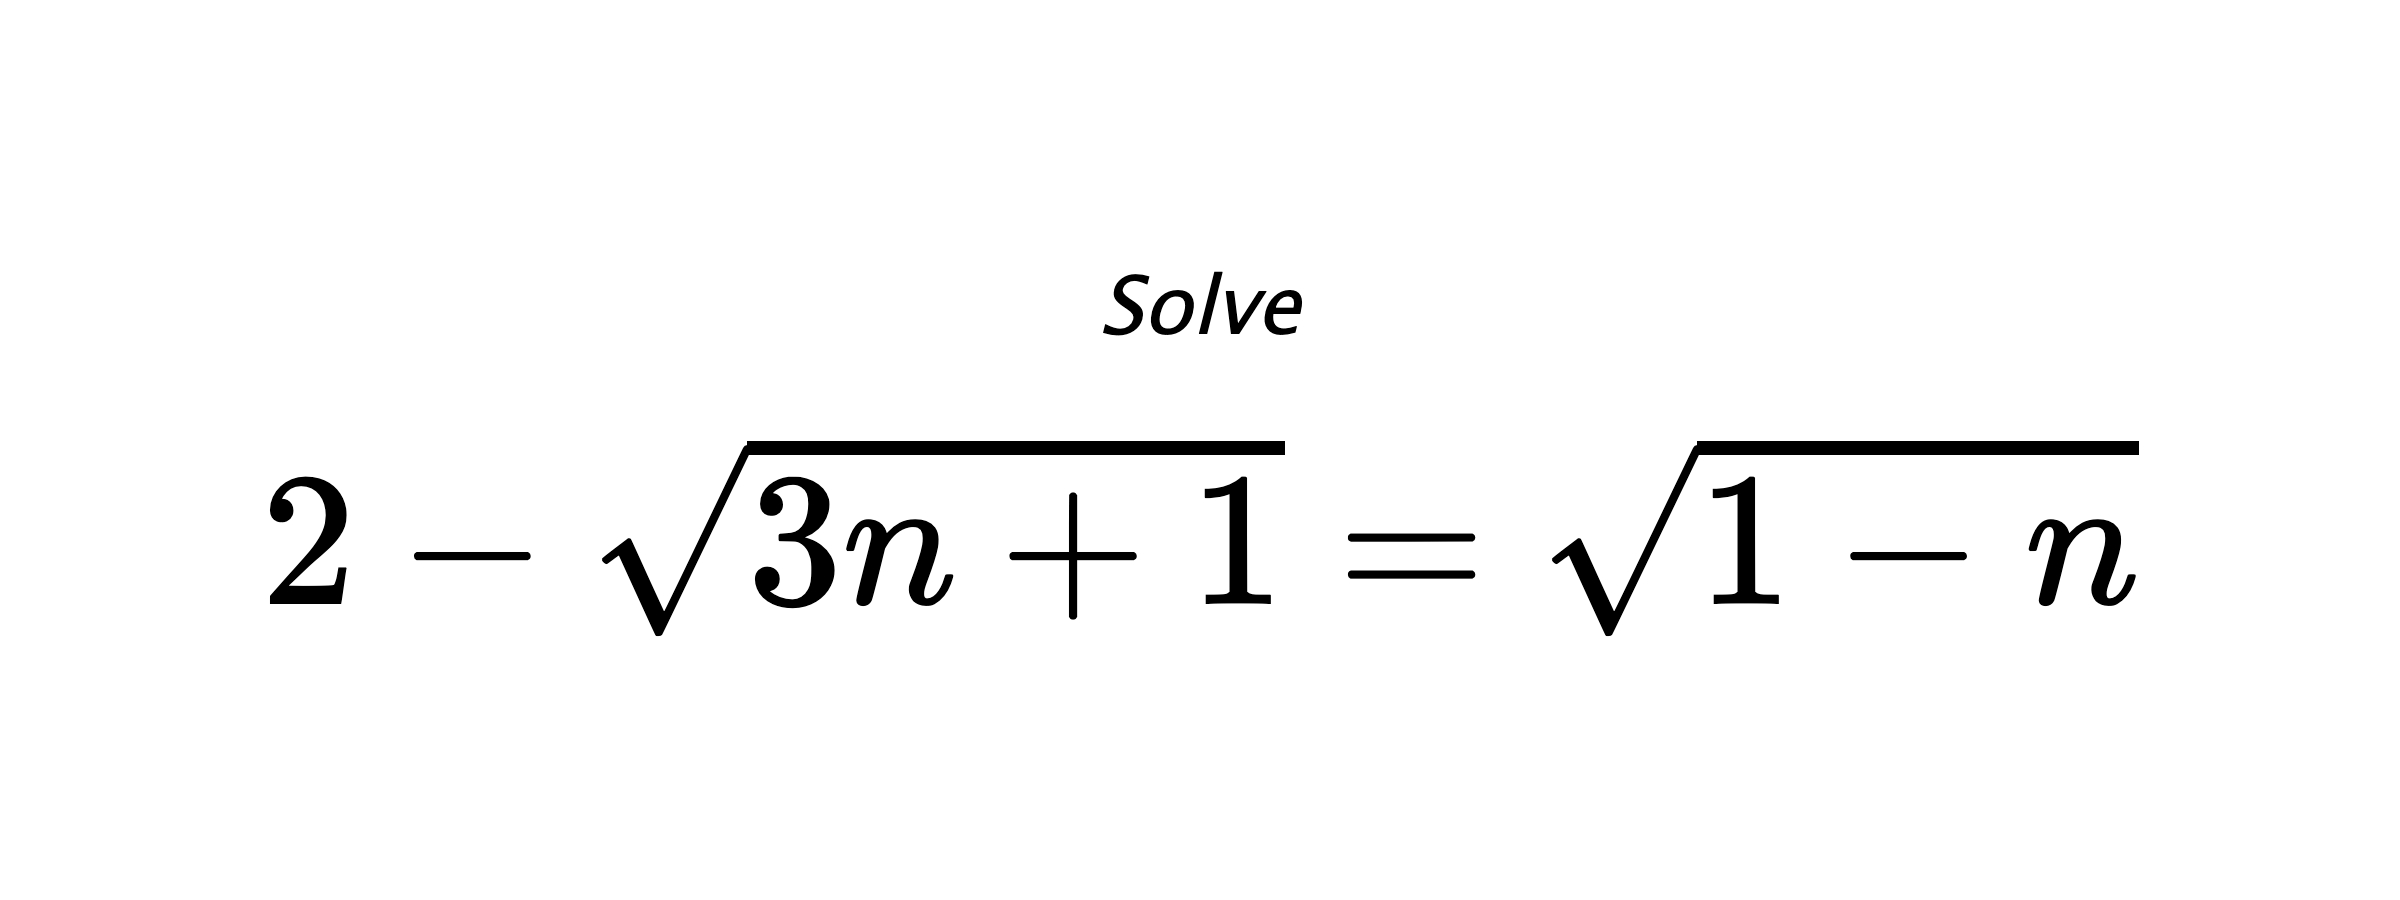 Solve $ 2-\sqrt{3n+1}=\sqrt{1-n} $